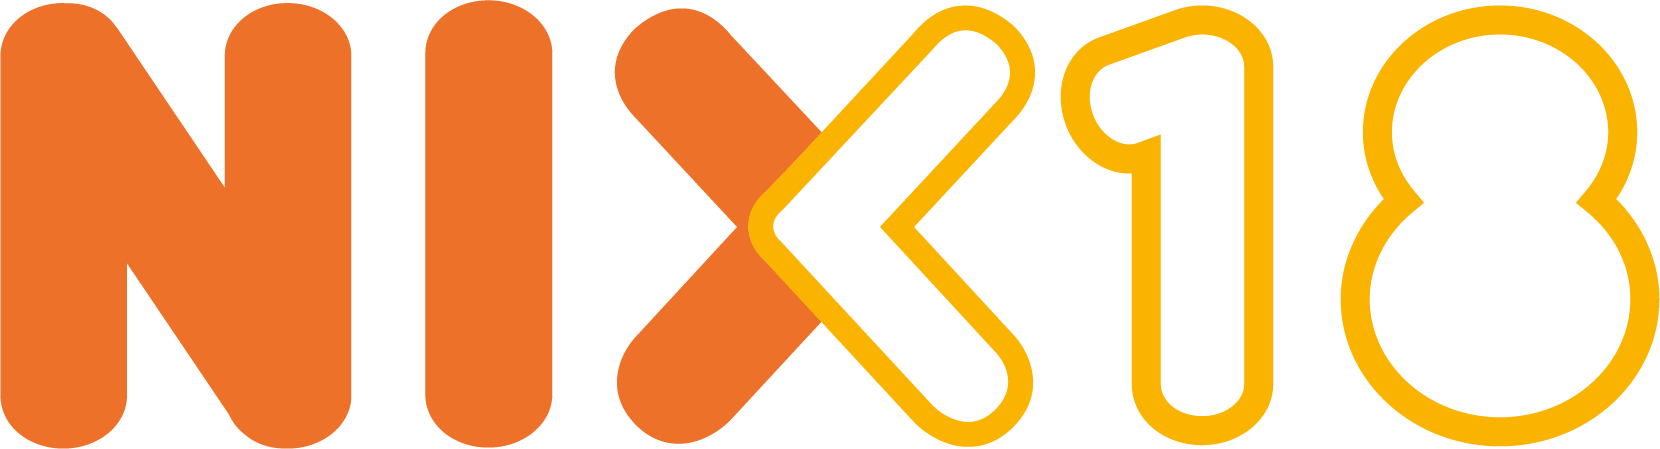 nix18-logo